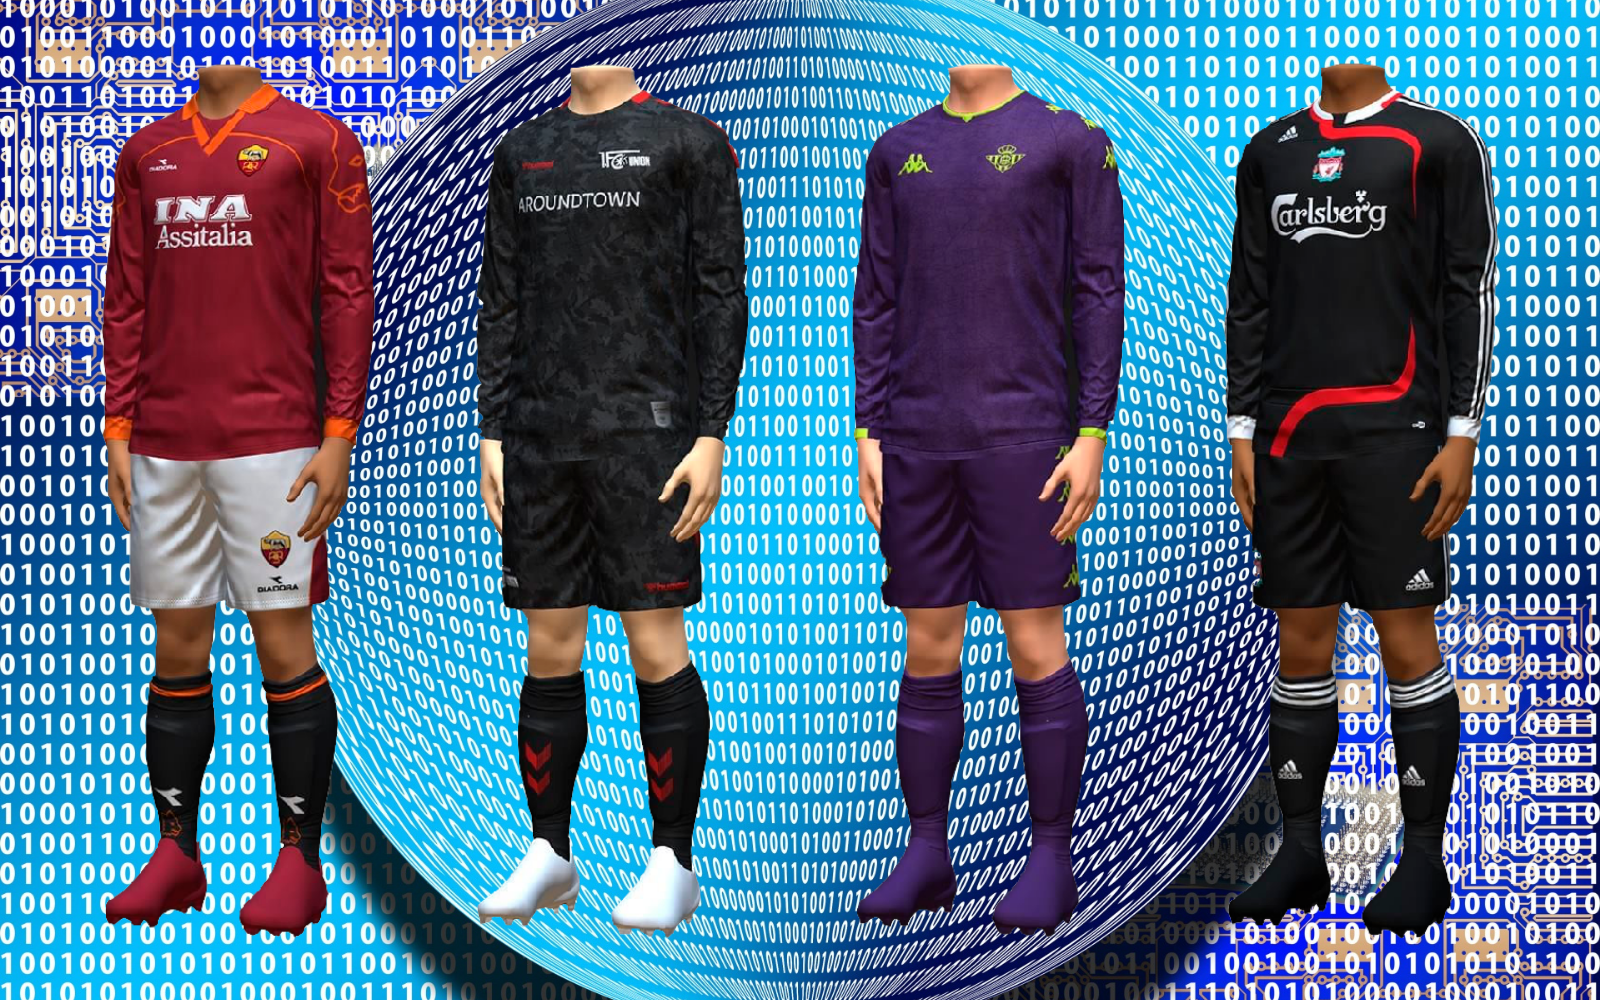 Football Kit Designer  Kit Customisation With Our Online Builder